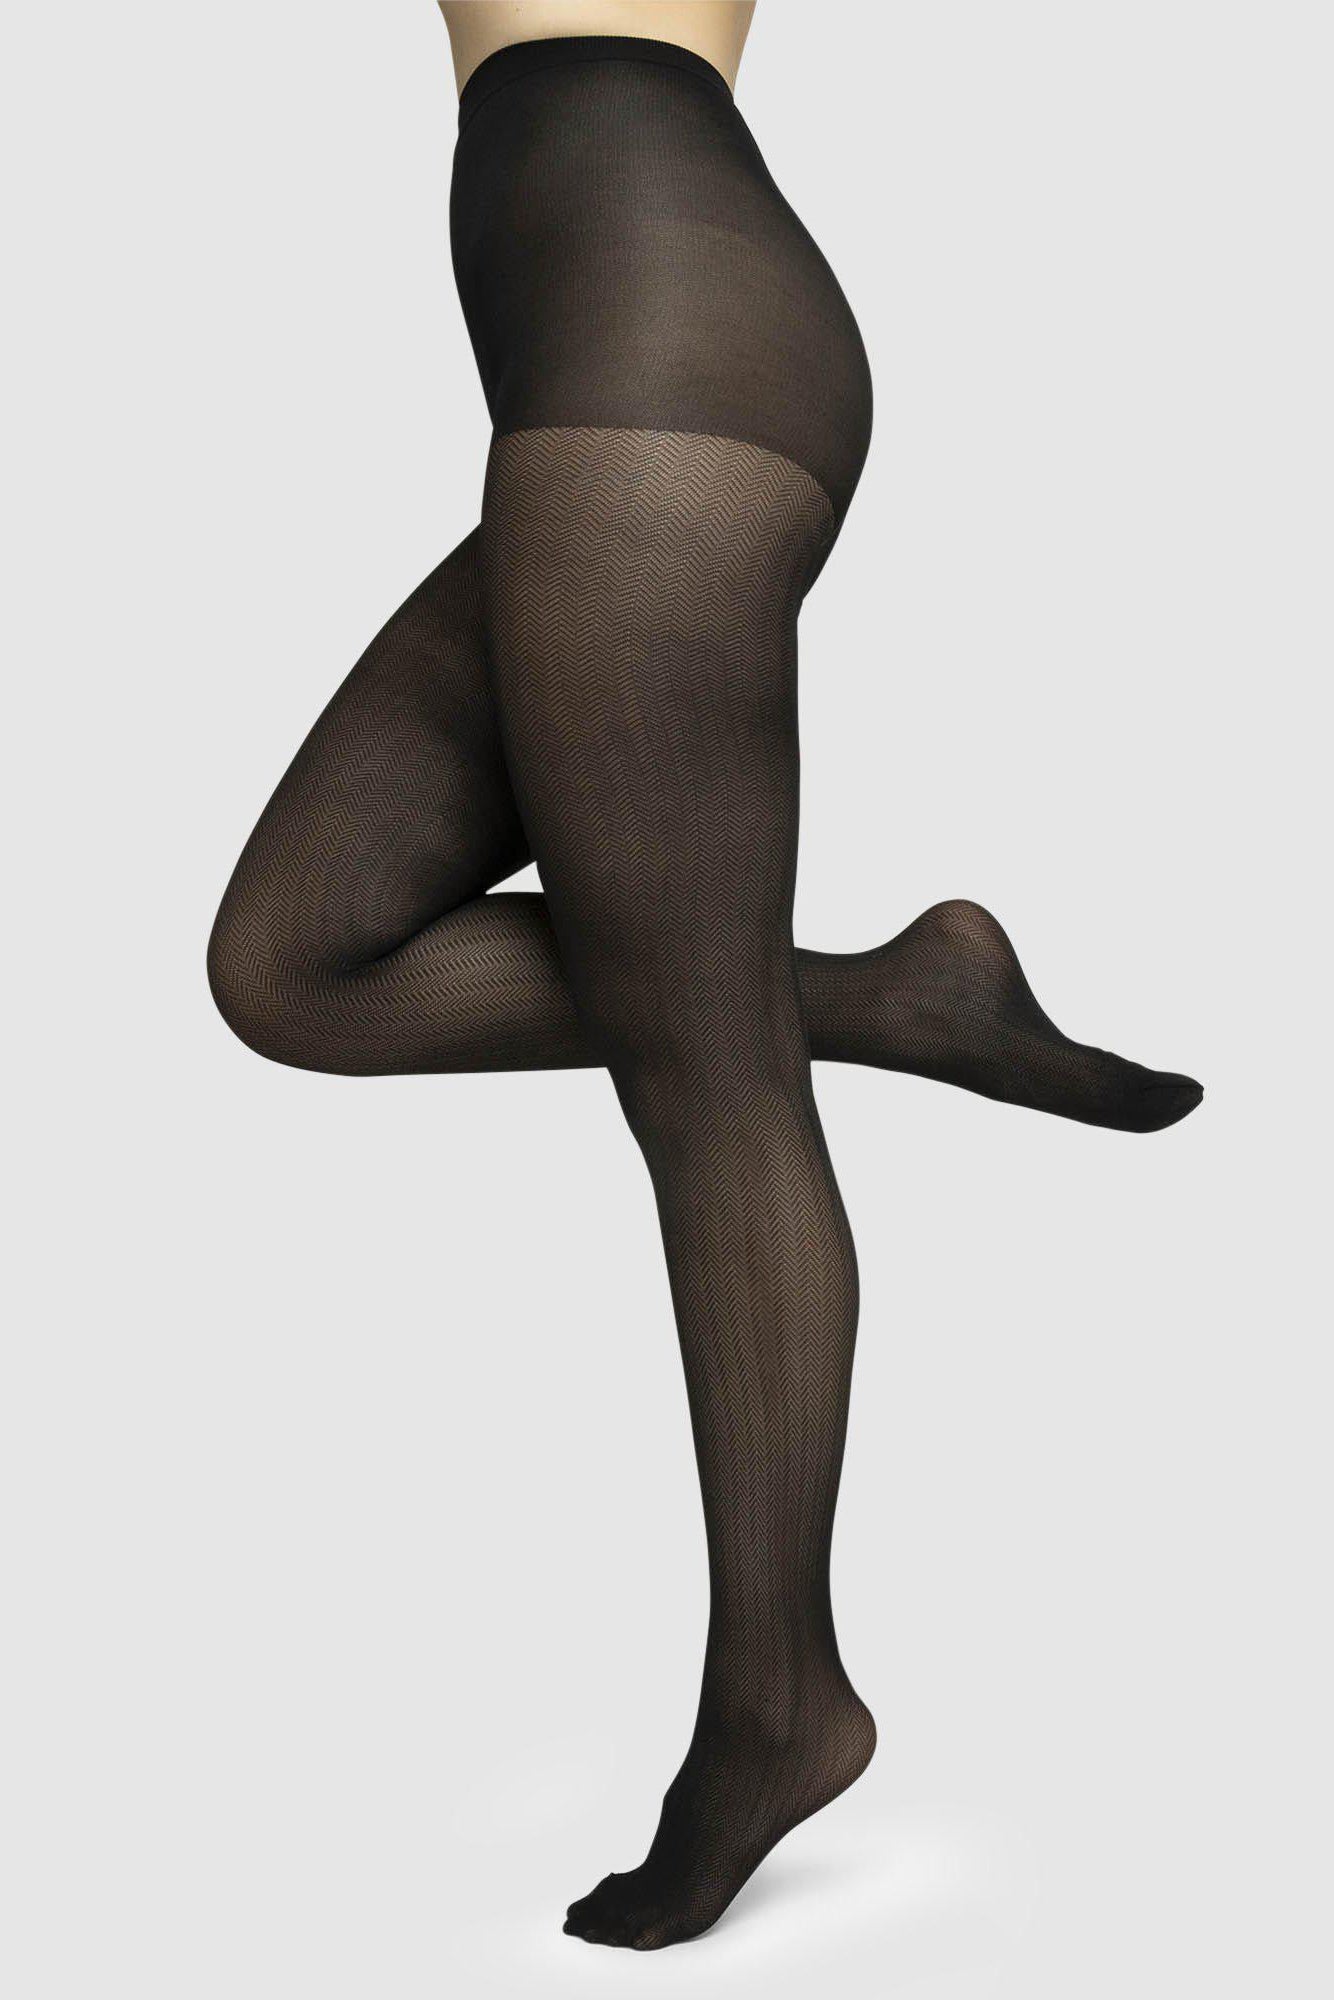 Swedish Stockings Nina Fishbone Tights - Black - RUM Amsterdam